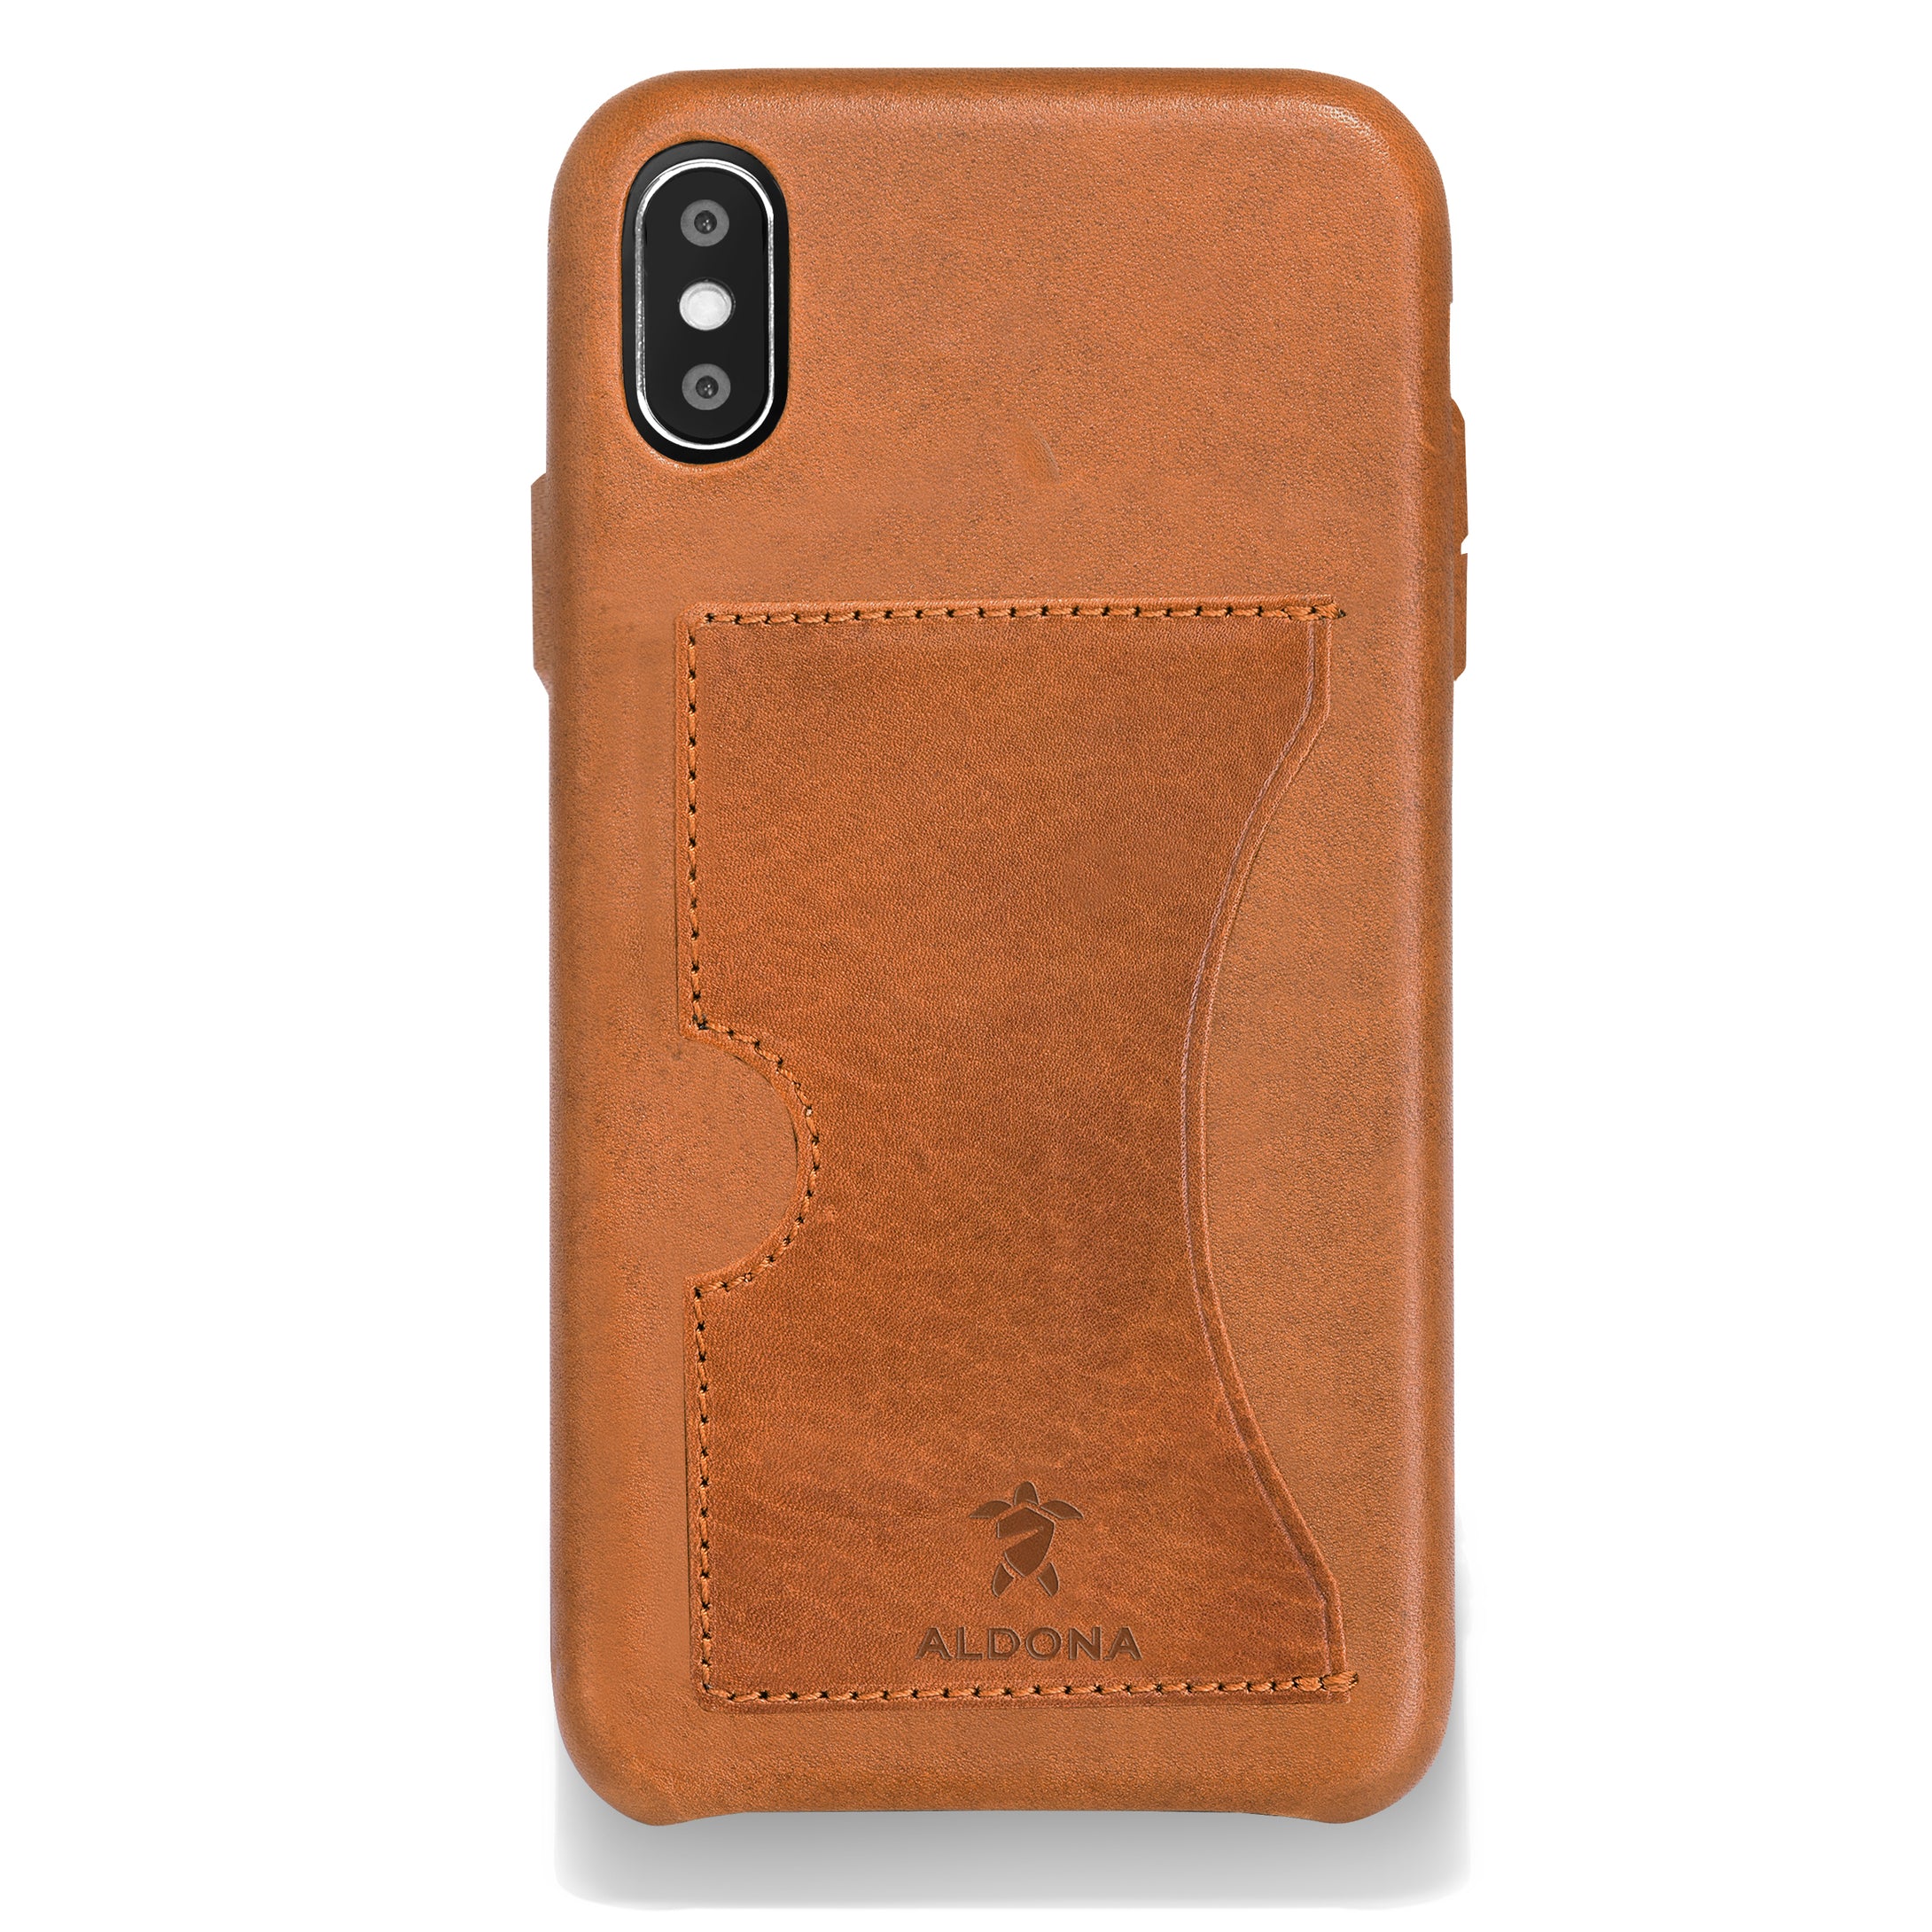 Baxter Leather iPhone XS Max Card Case - Wild Oak Colour